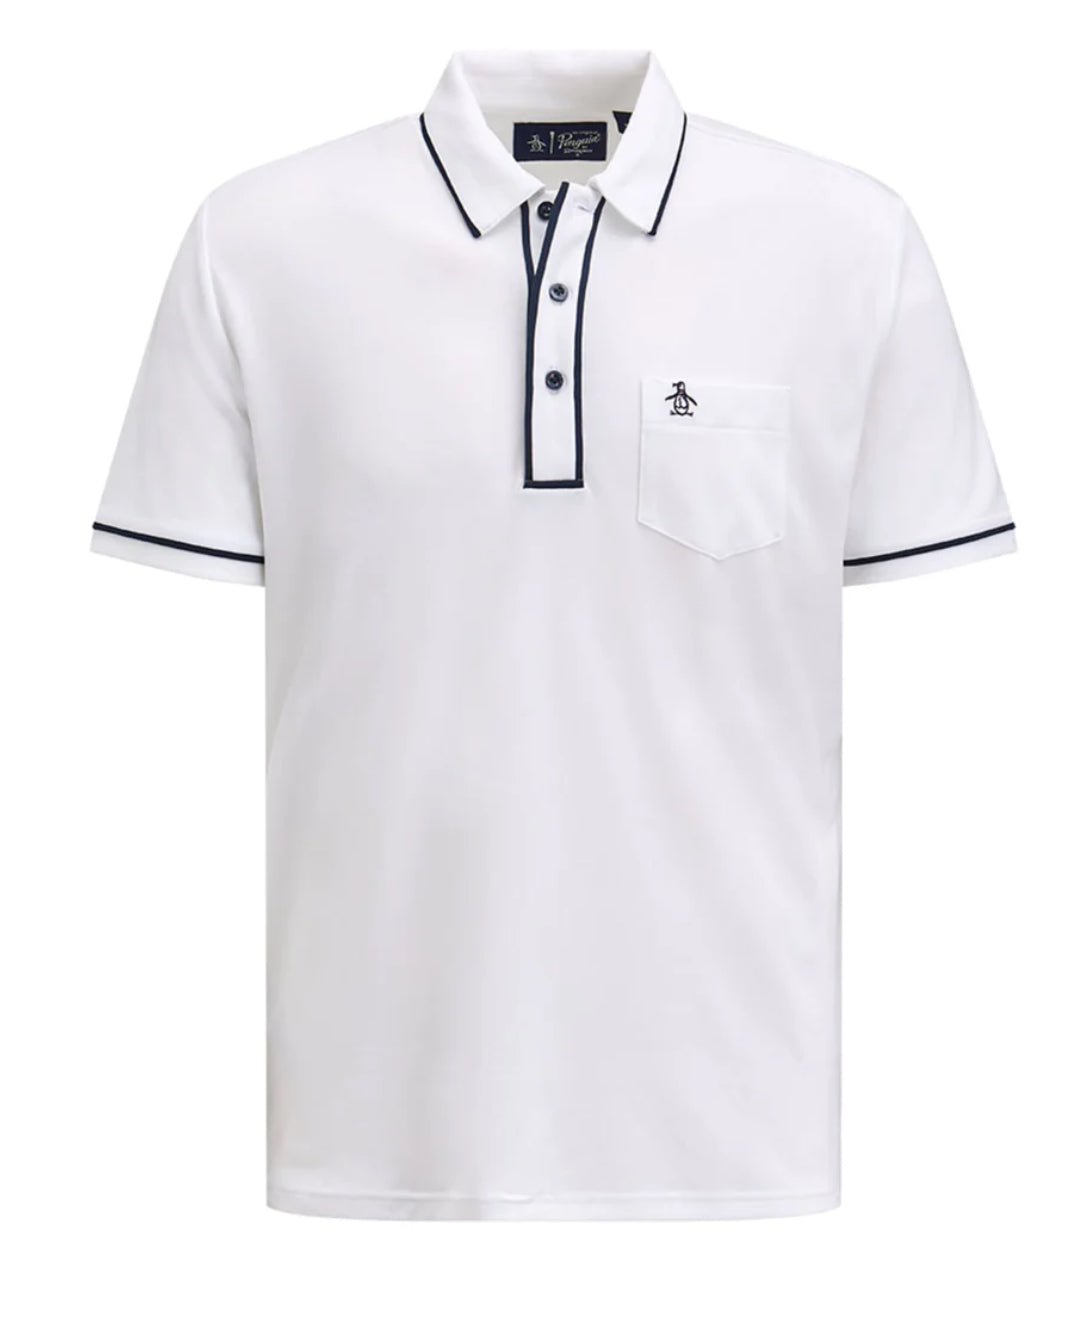 Earl Cotton Pique Golf Shirt in Bright White